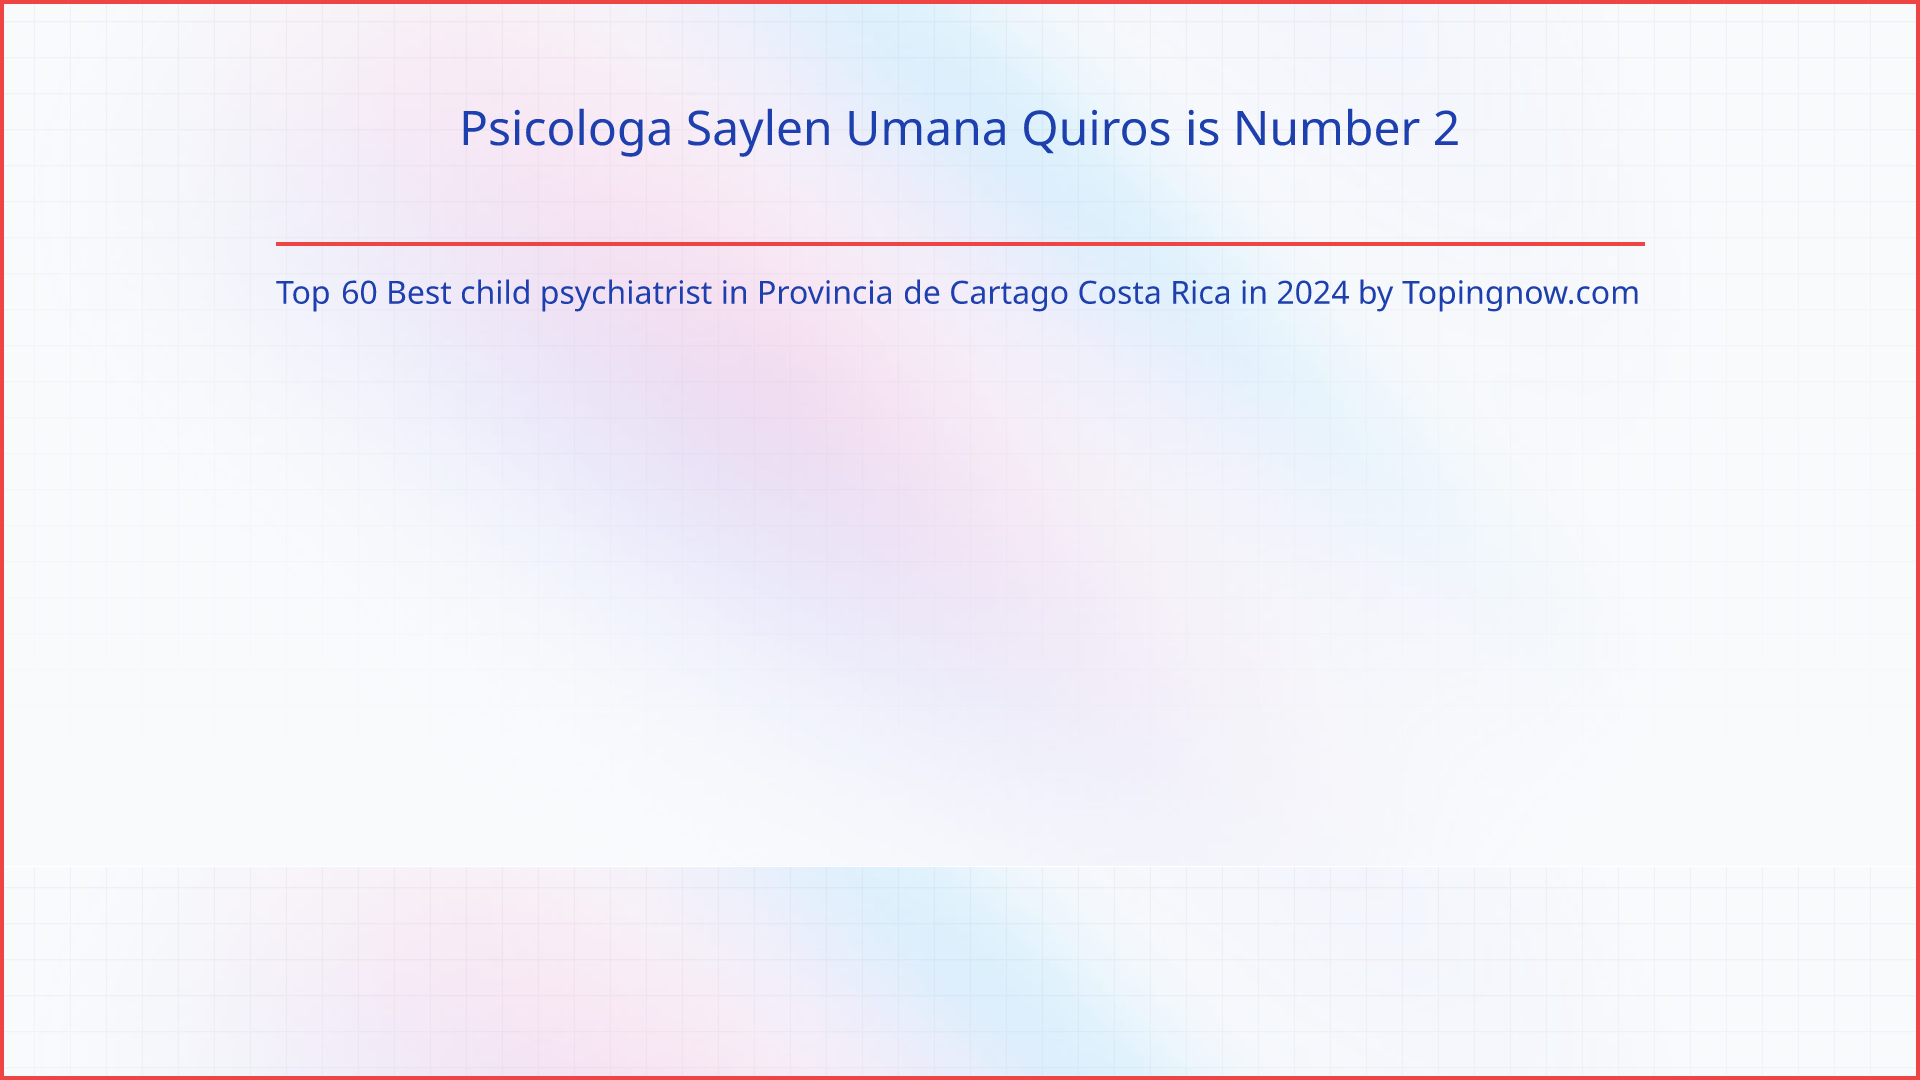 Psicologa Saylen Umana Quiros: Top 60 Best child psychiatrist in Provincia de Cartago Costa Rica in 2024